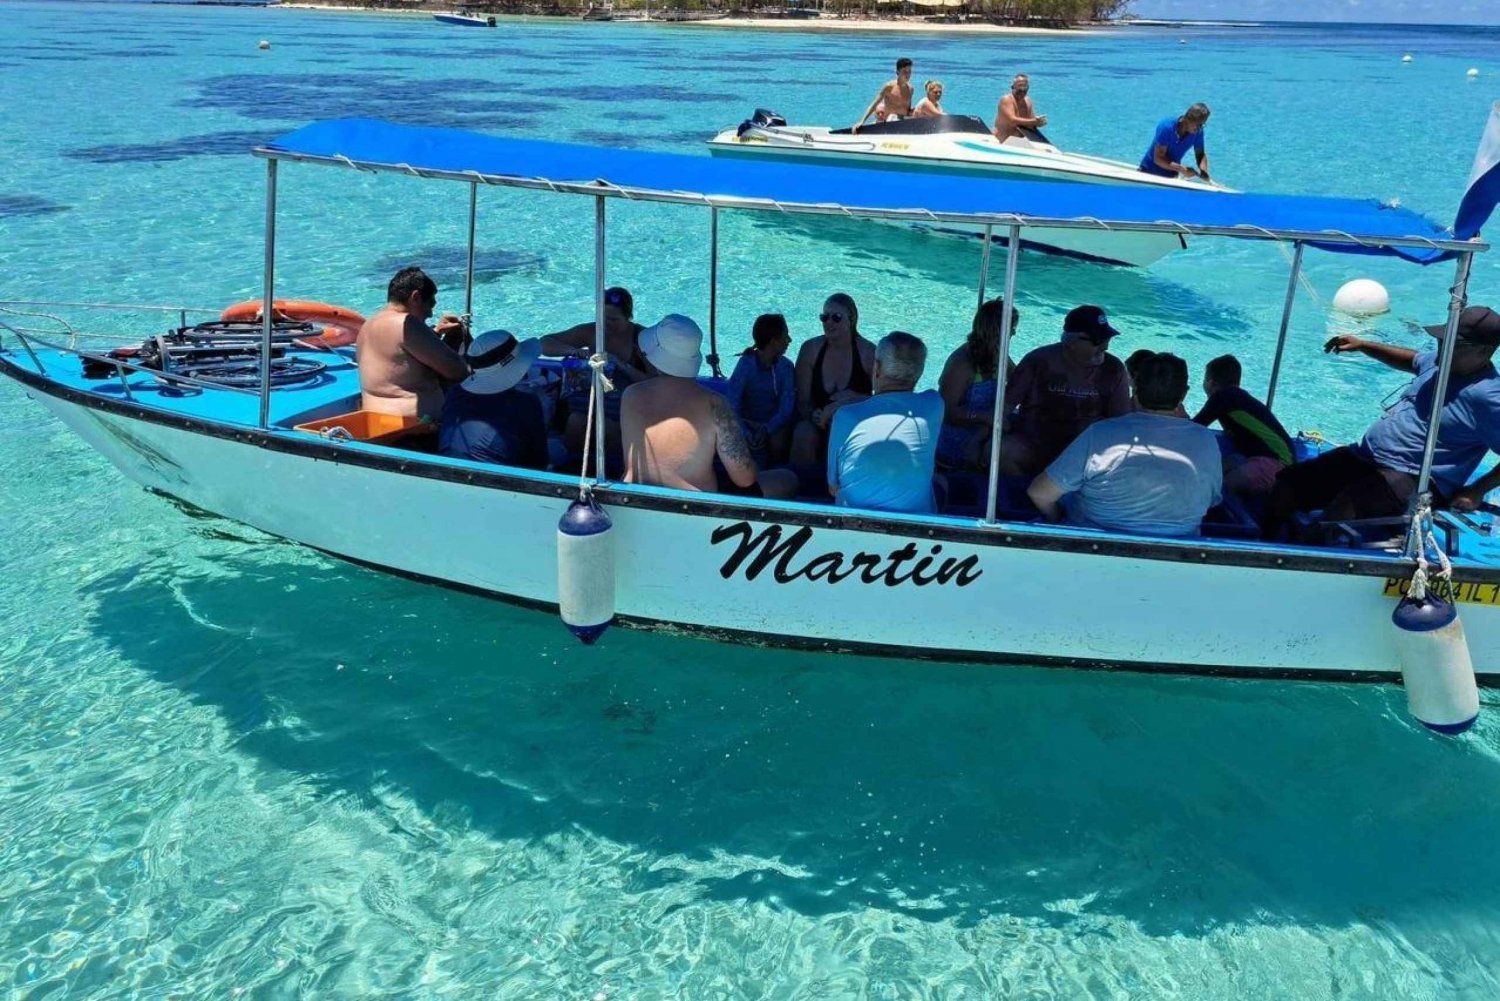 Martin Boat tours